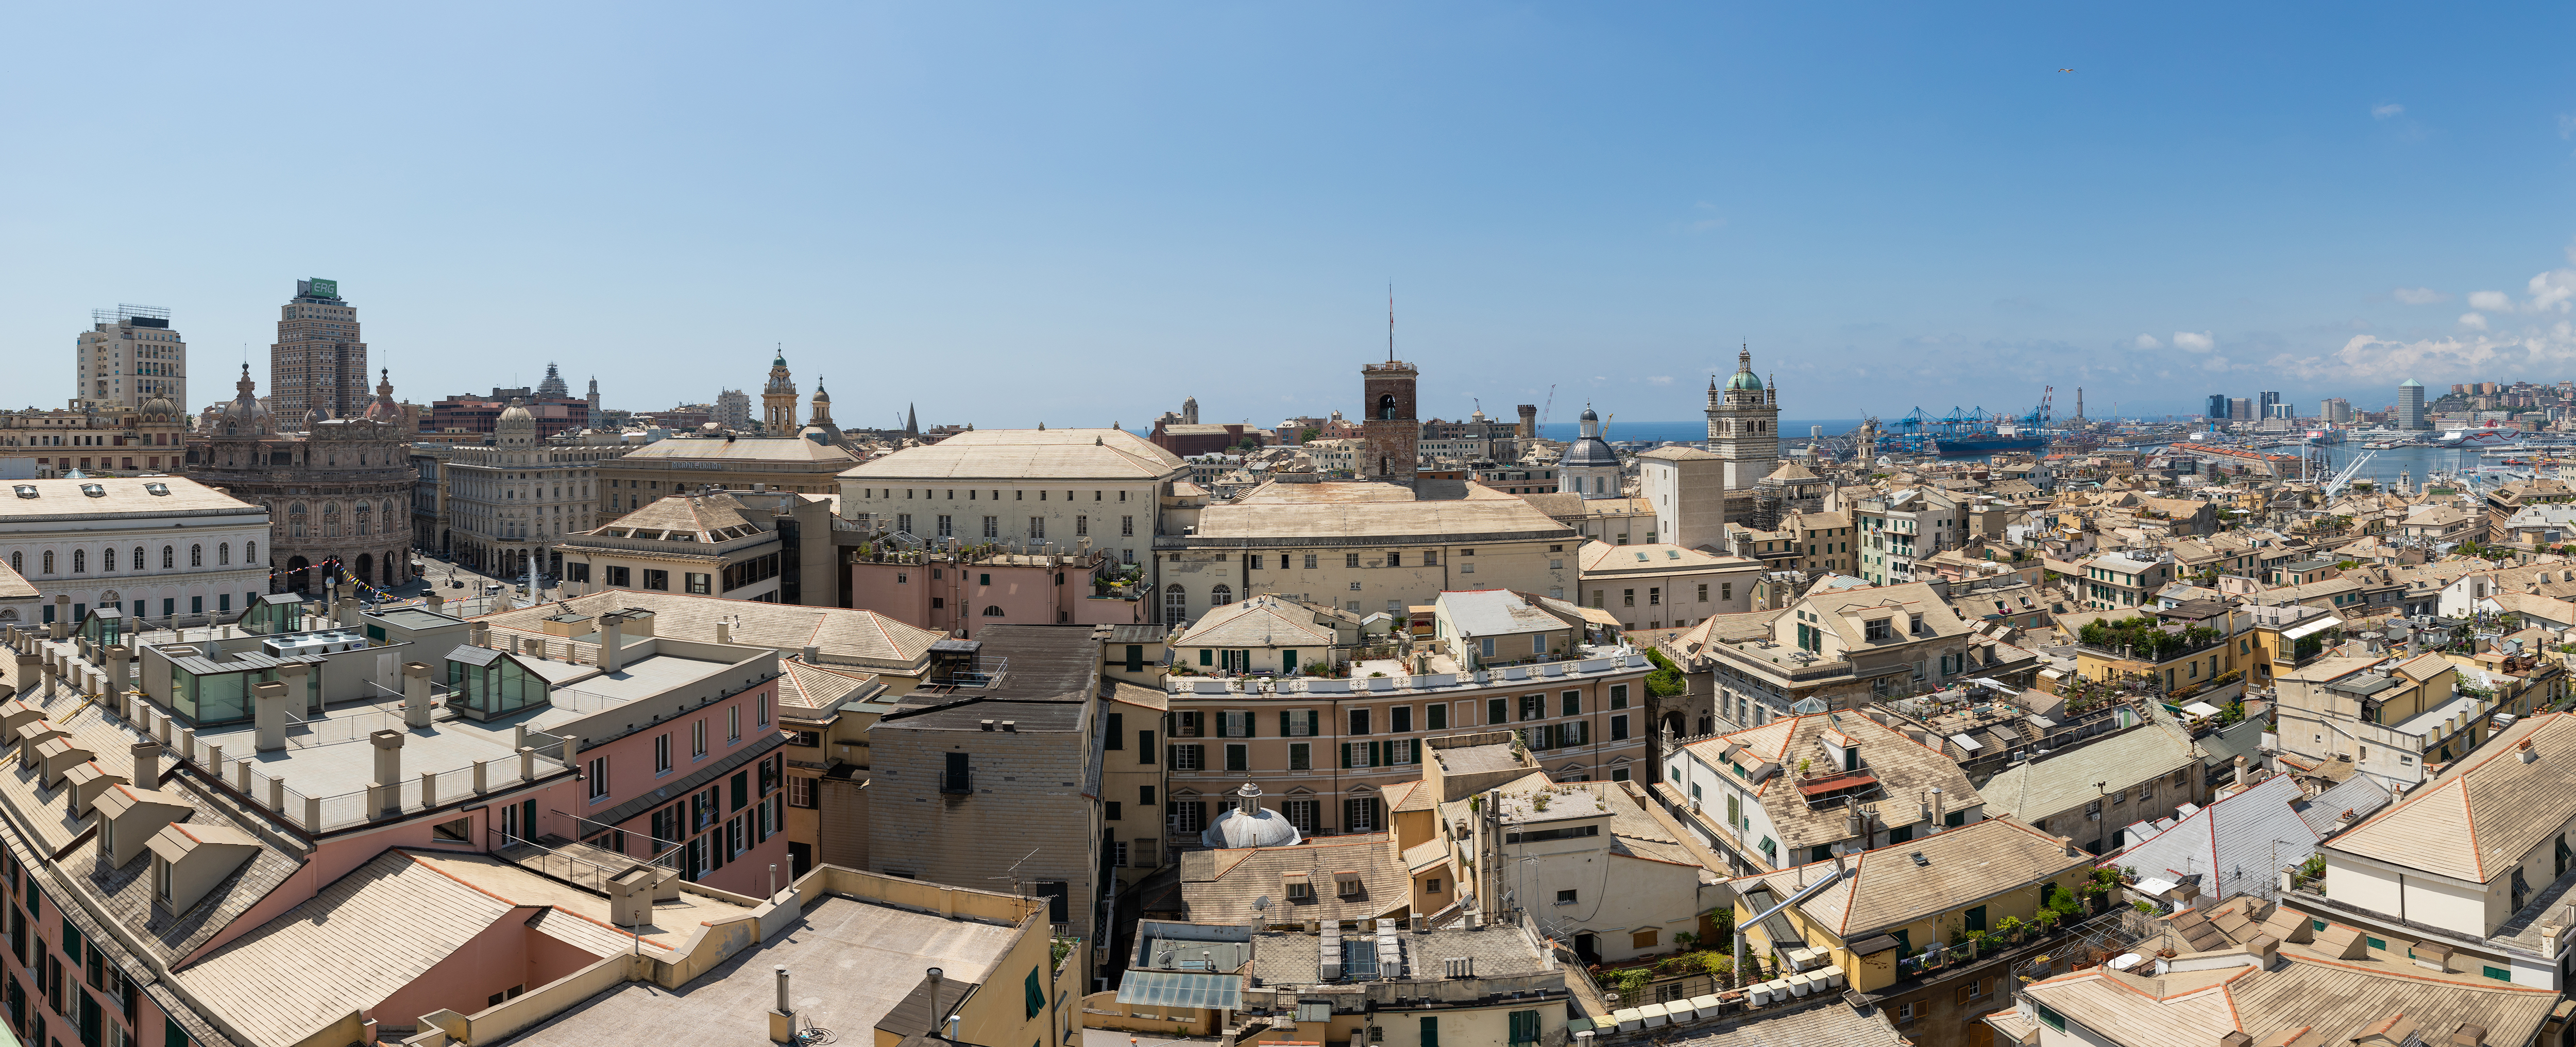 Roofs of Genoa